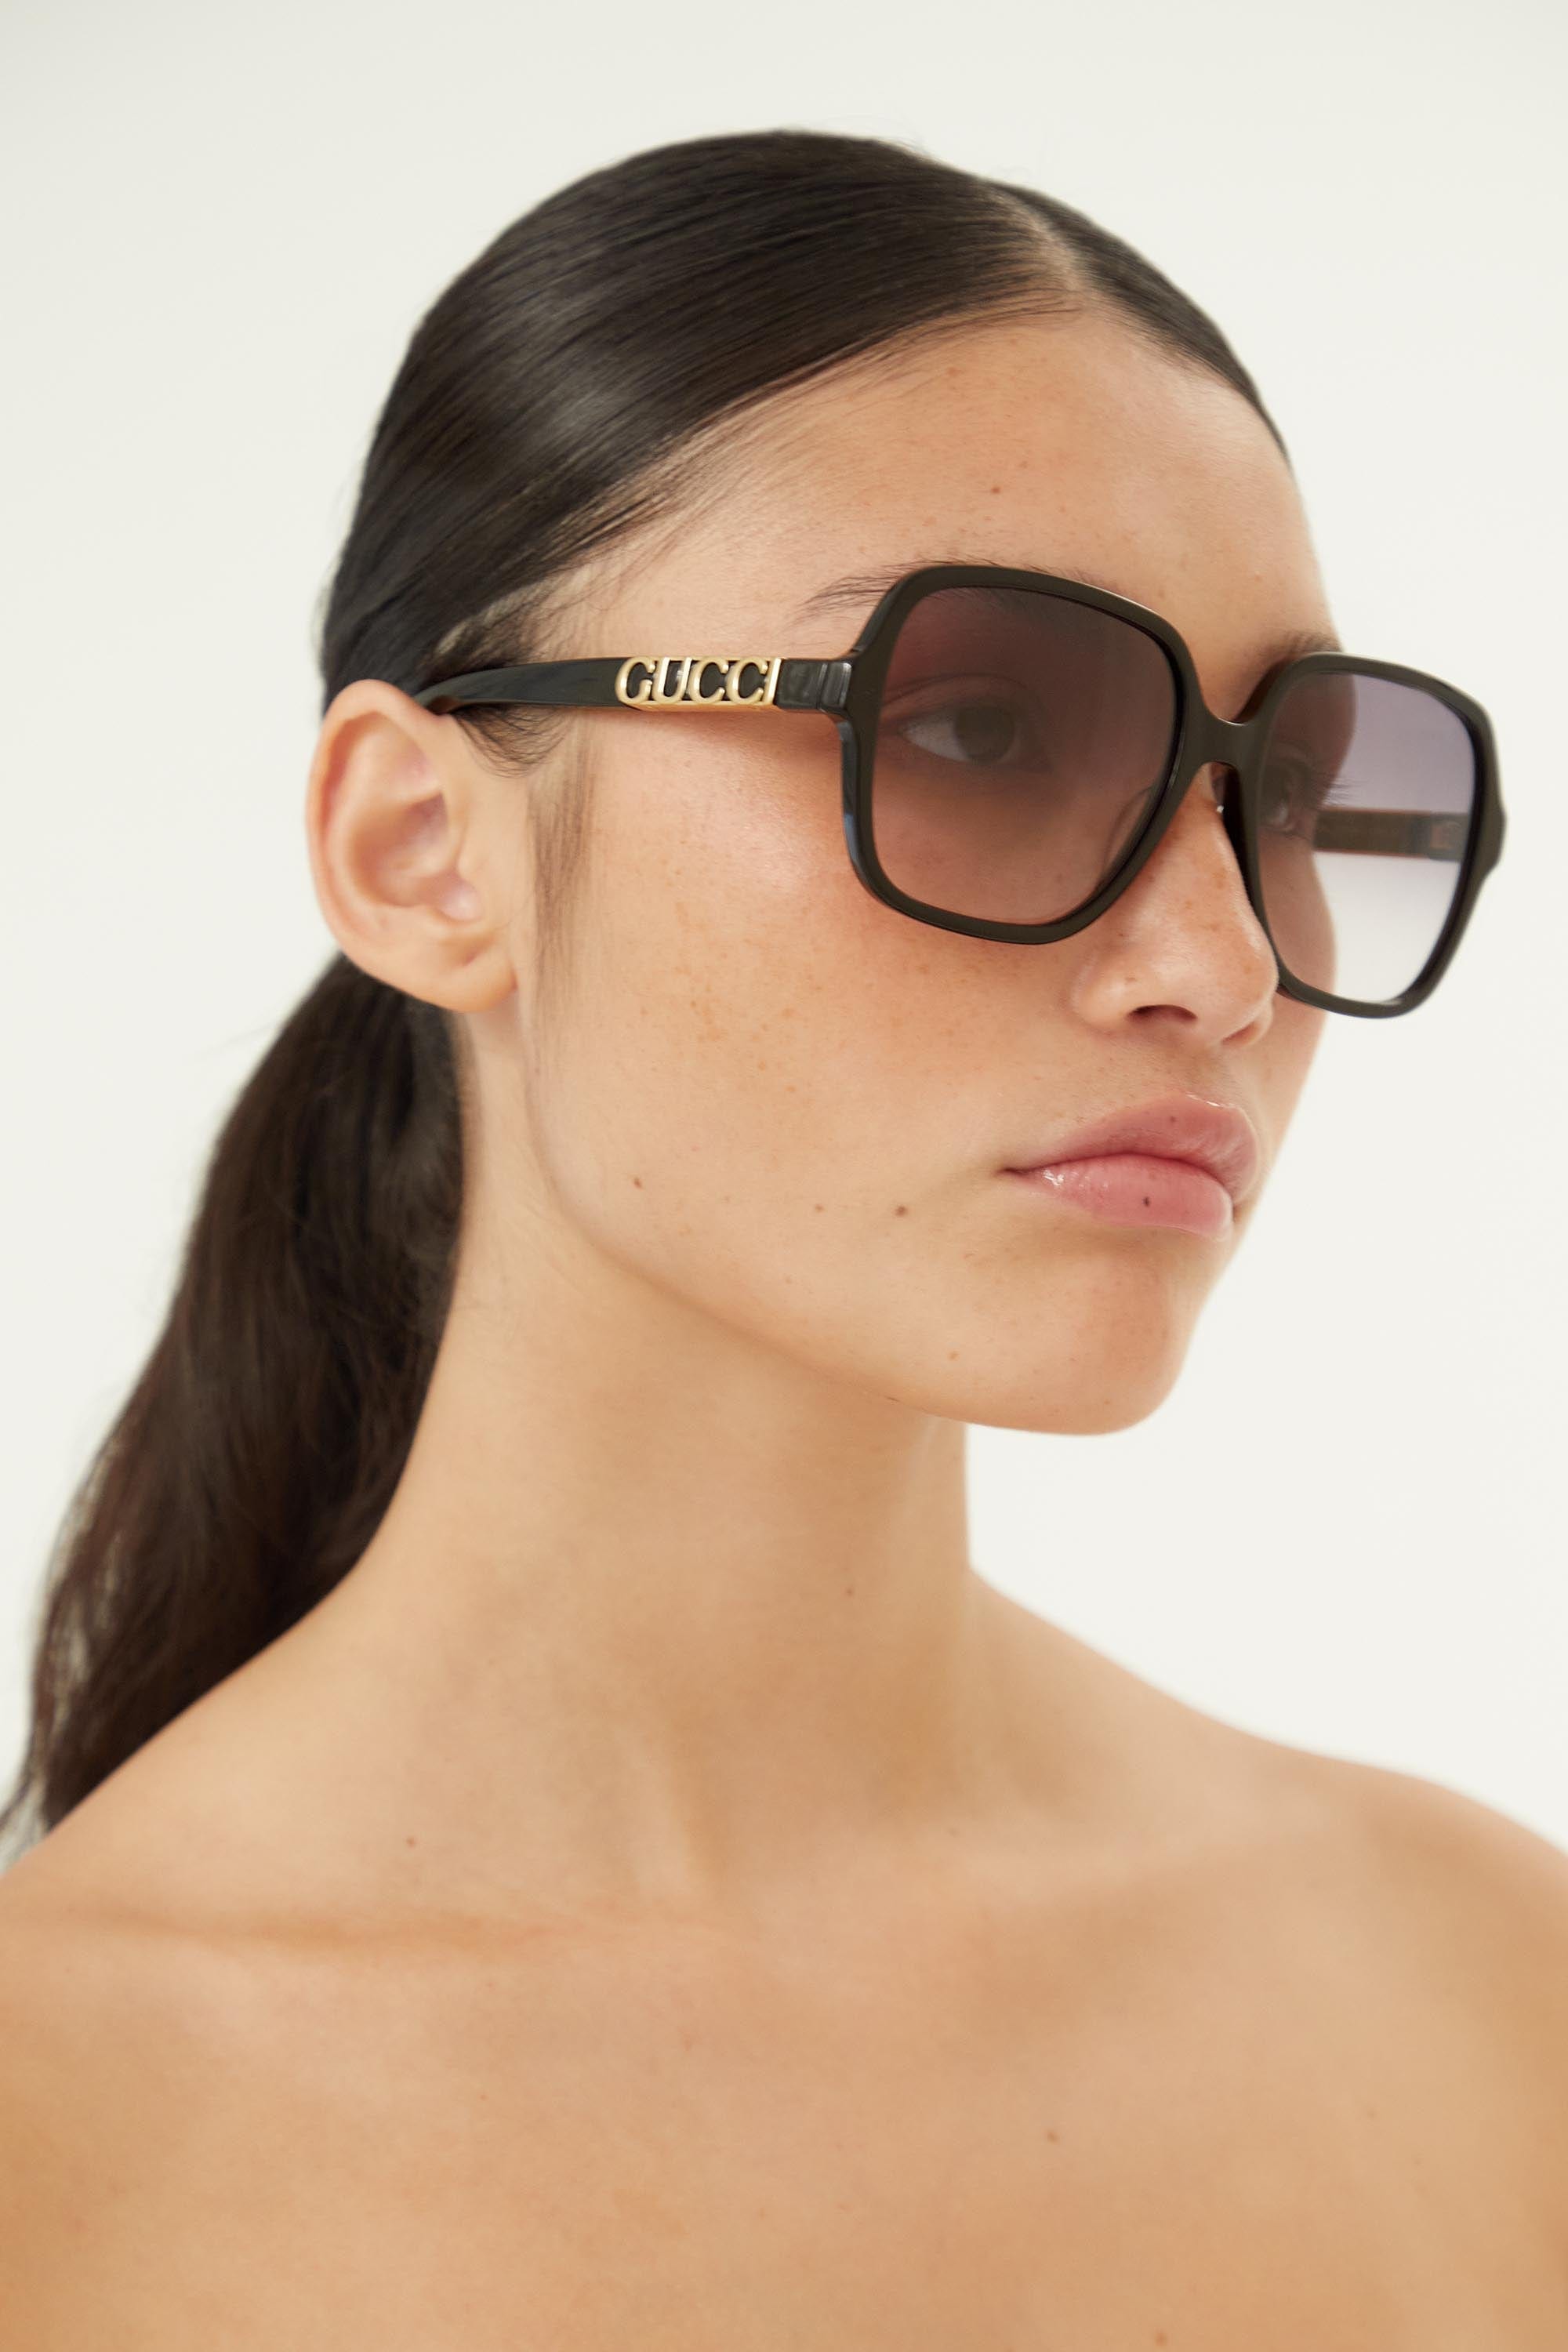 Gucci vintage look squared sunglasses - Eyewear Club